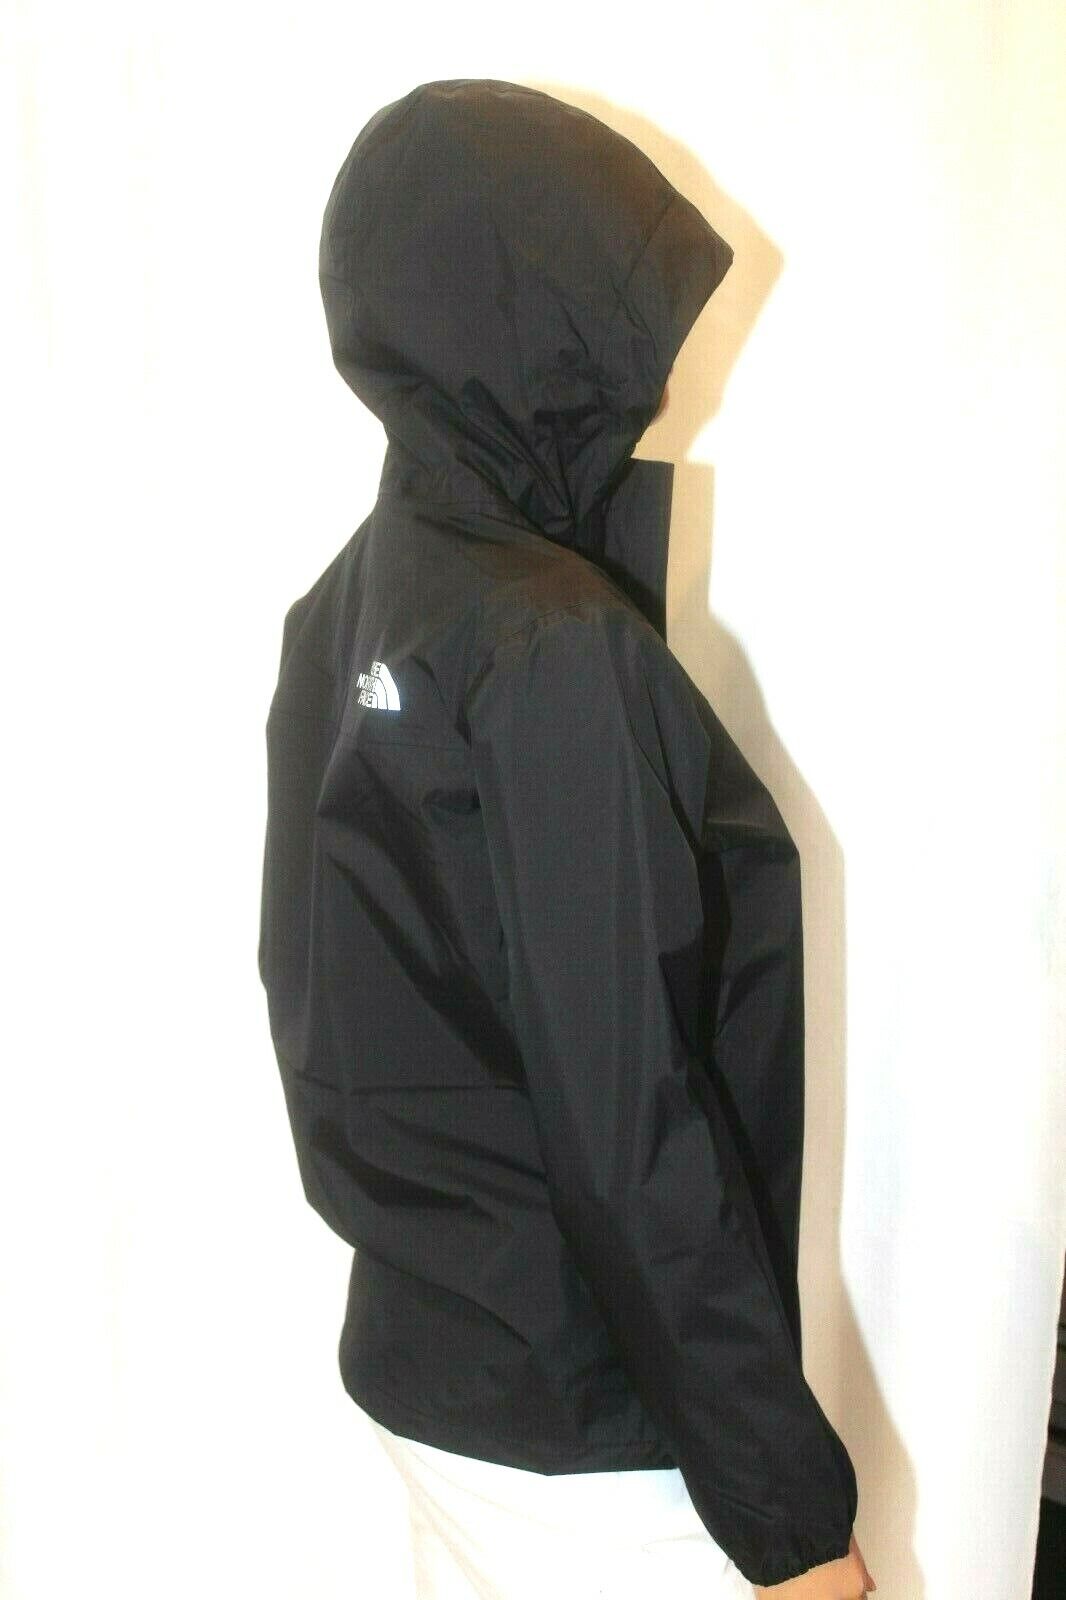 *NWT* $70. North Face Resolve Reflective Girls Black Rain Jacket HyVent Hood LG